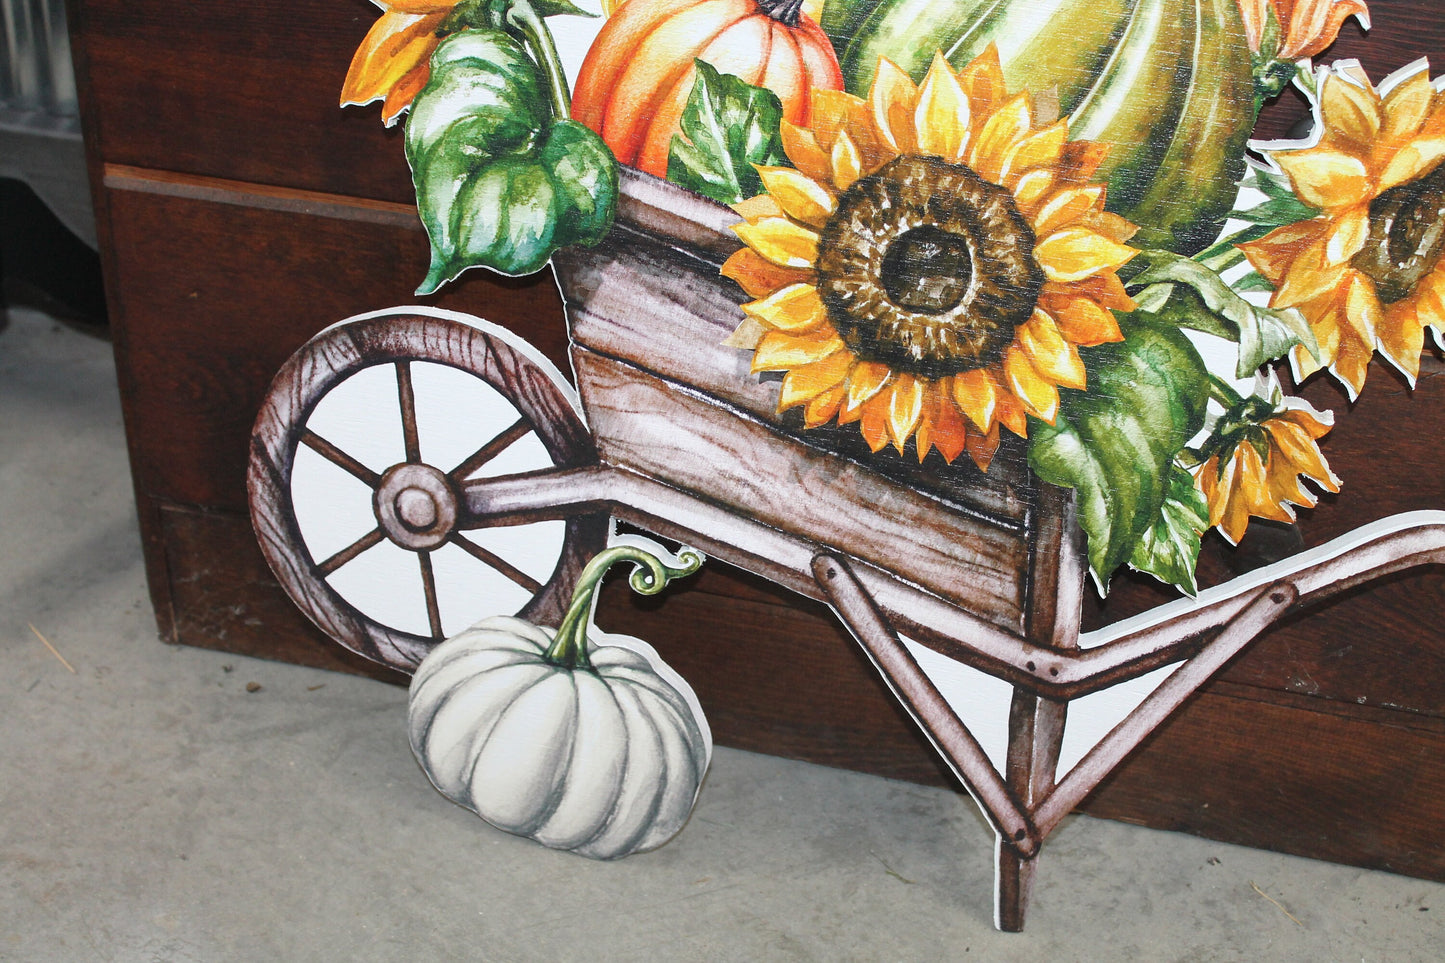 Harvest Pumpkin Porch Decor Farmstand Sunflower Cart Gift Gourd Fall Autumn Wheel Barrel Printed Flower Bed Decoration Orange Green Rustic